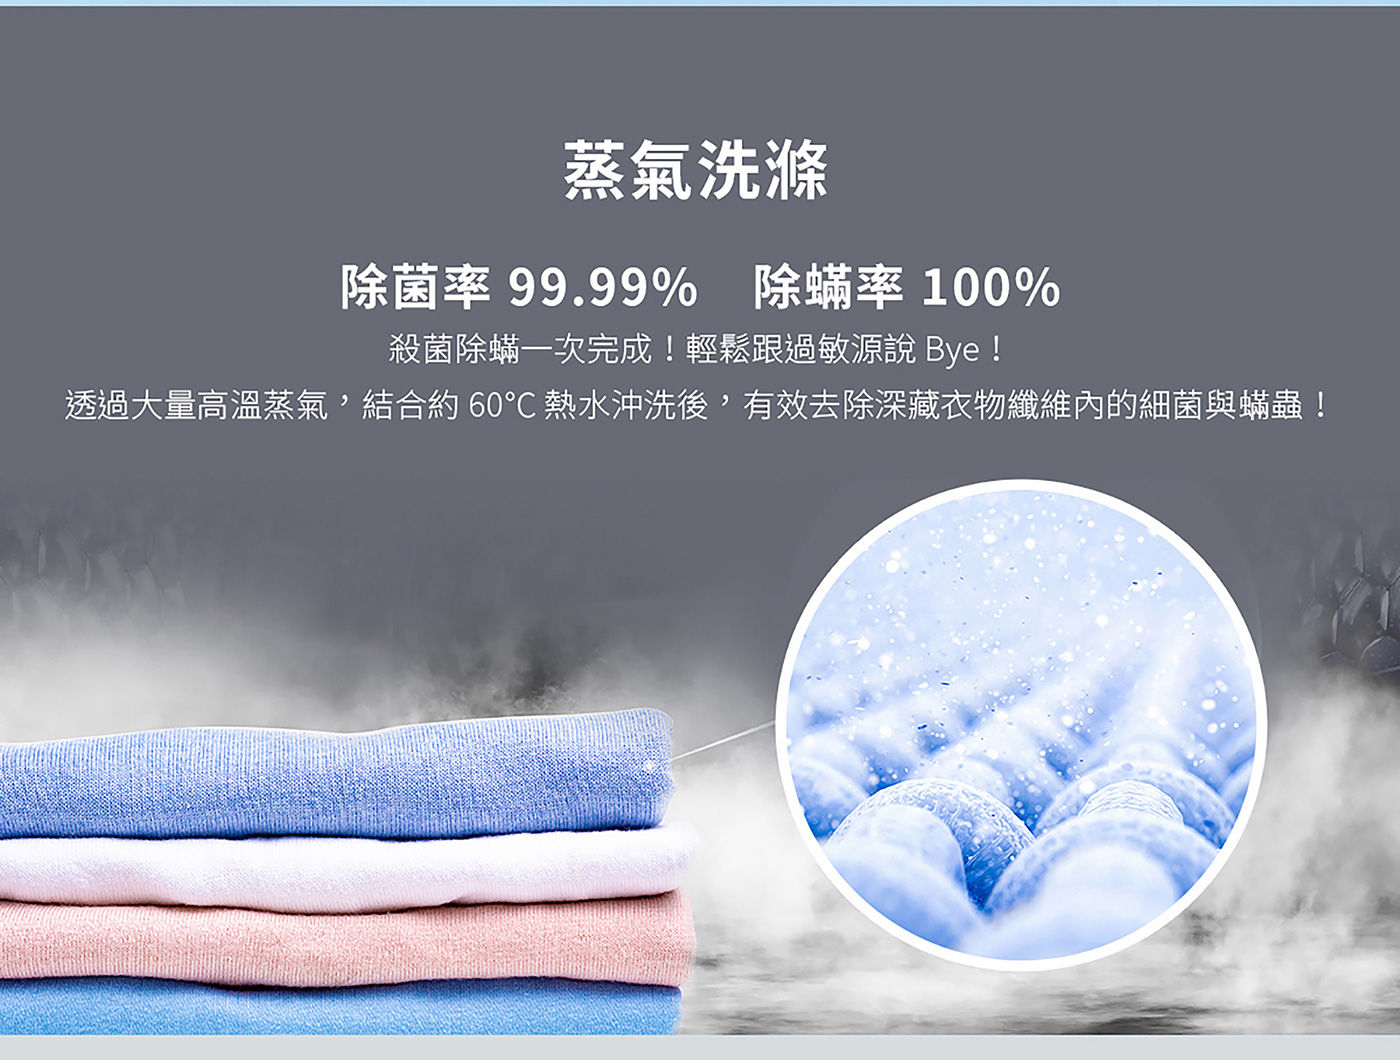 TCL 蒸洗脫烘變頻滾筒洗衣機 10/7公斤 高溫蒸氣洗滌除菌率99.99%除蟎率100%輕鬆跟過敏源說再見